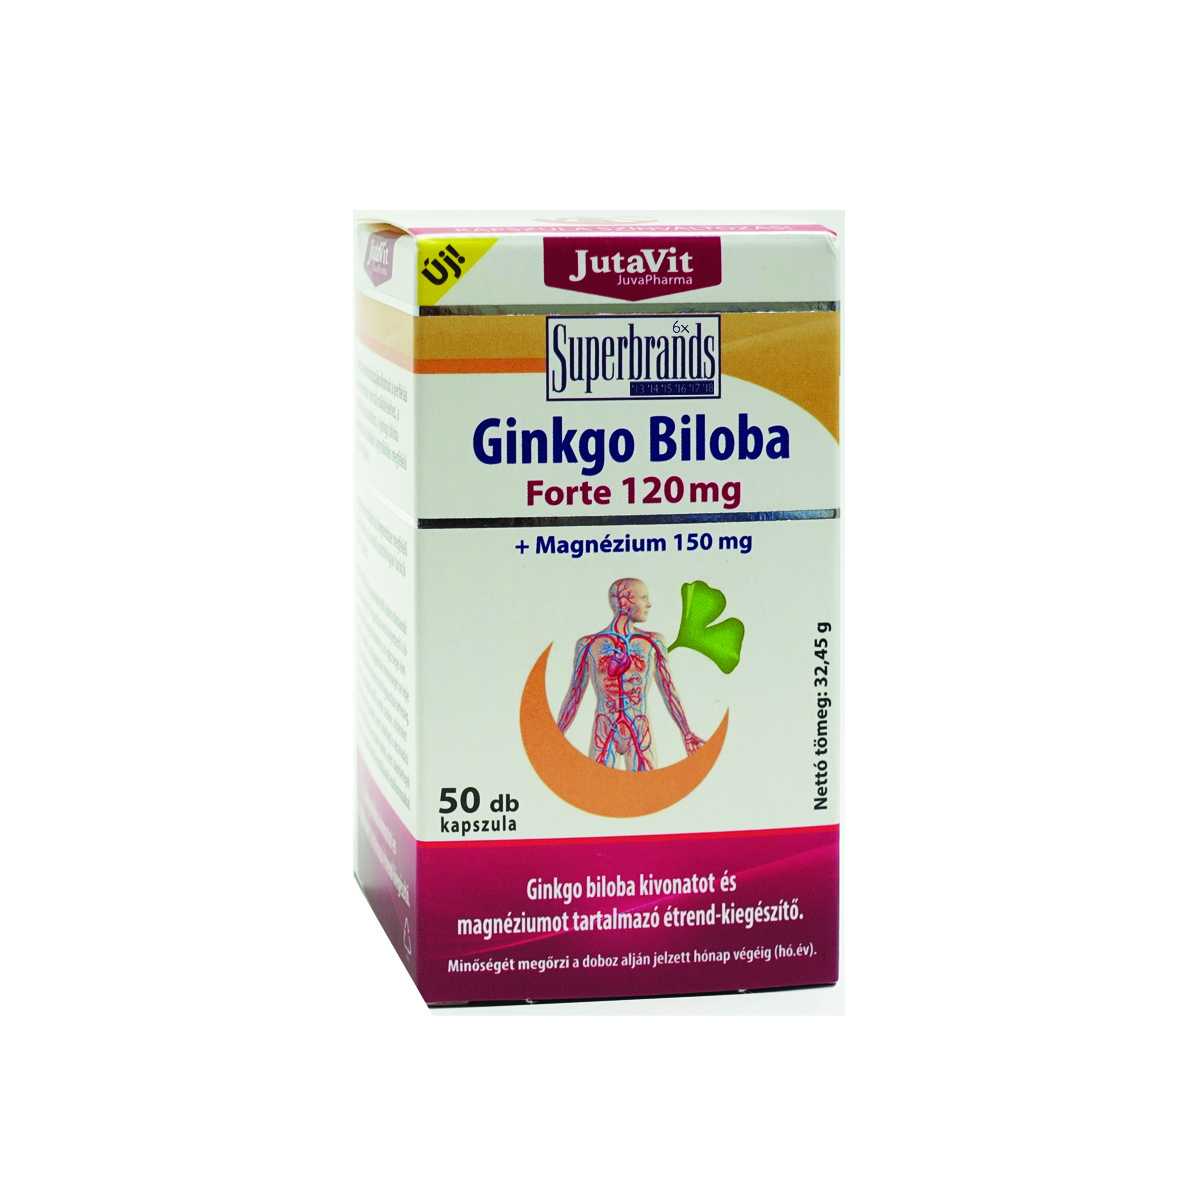 JutaVit Ginkgo Biloba Forte 120 mg kapszula